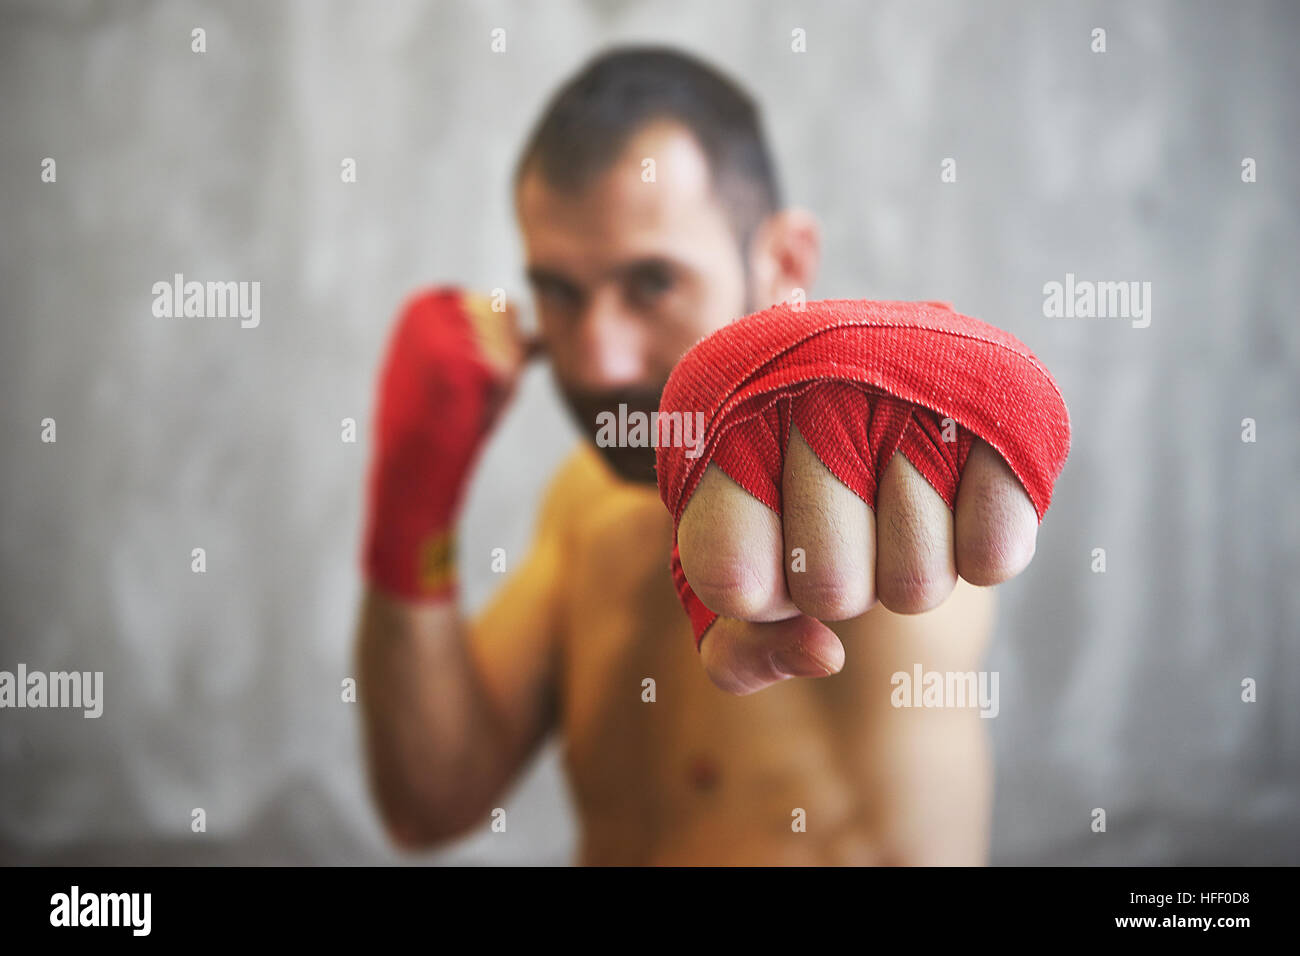 Disparo de manos envueltas con cinta de boxeo roja de pelea de